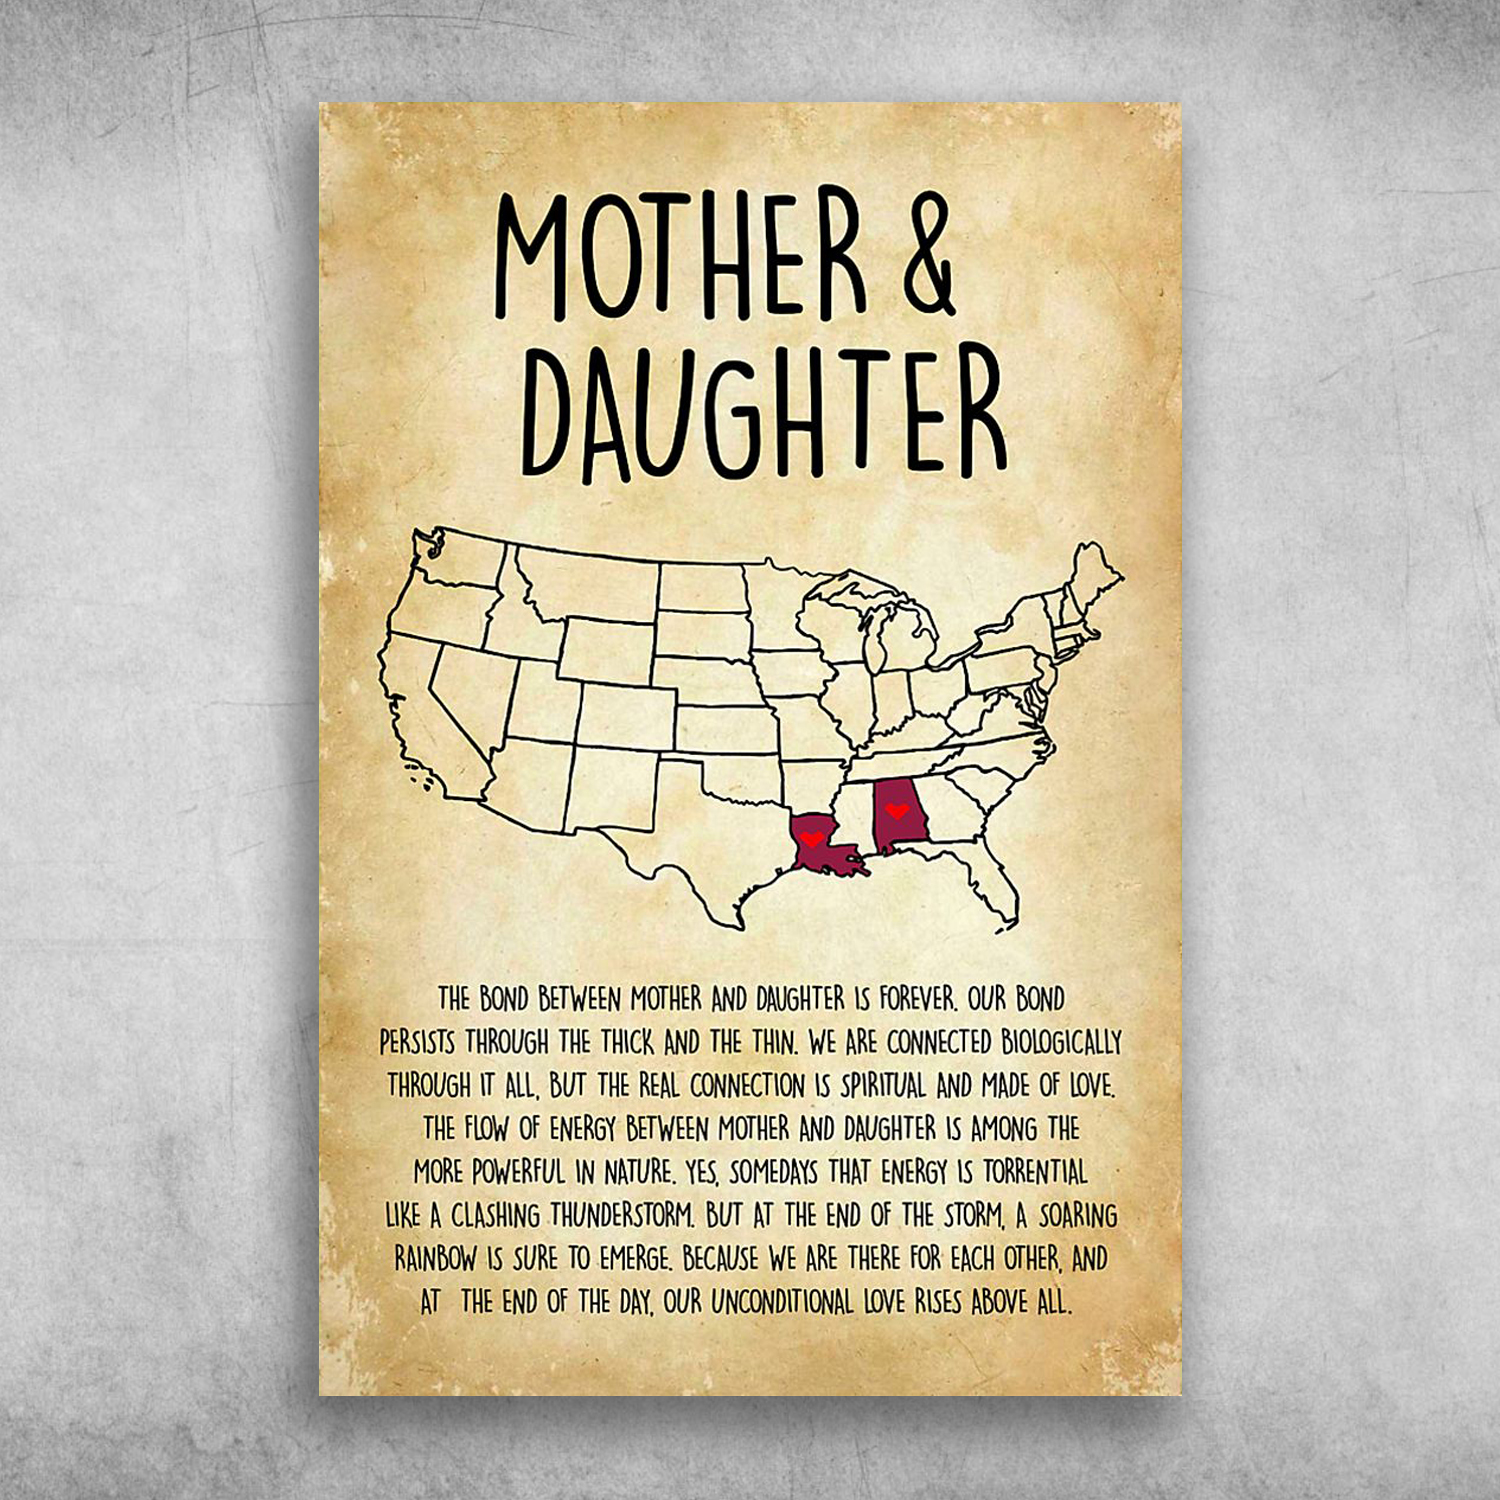 Mother And Daughter Like Louisiana And Alabama America